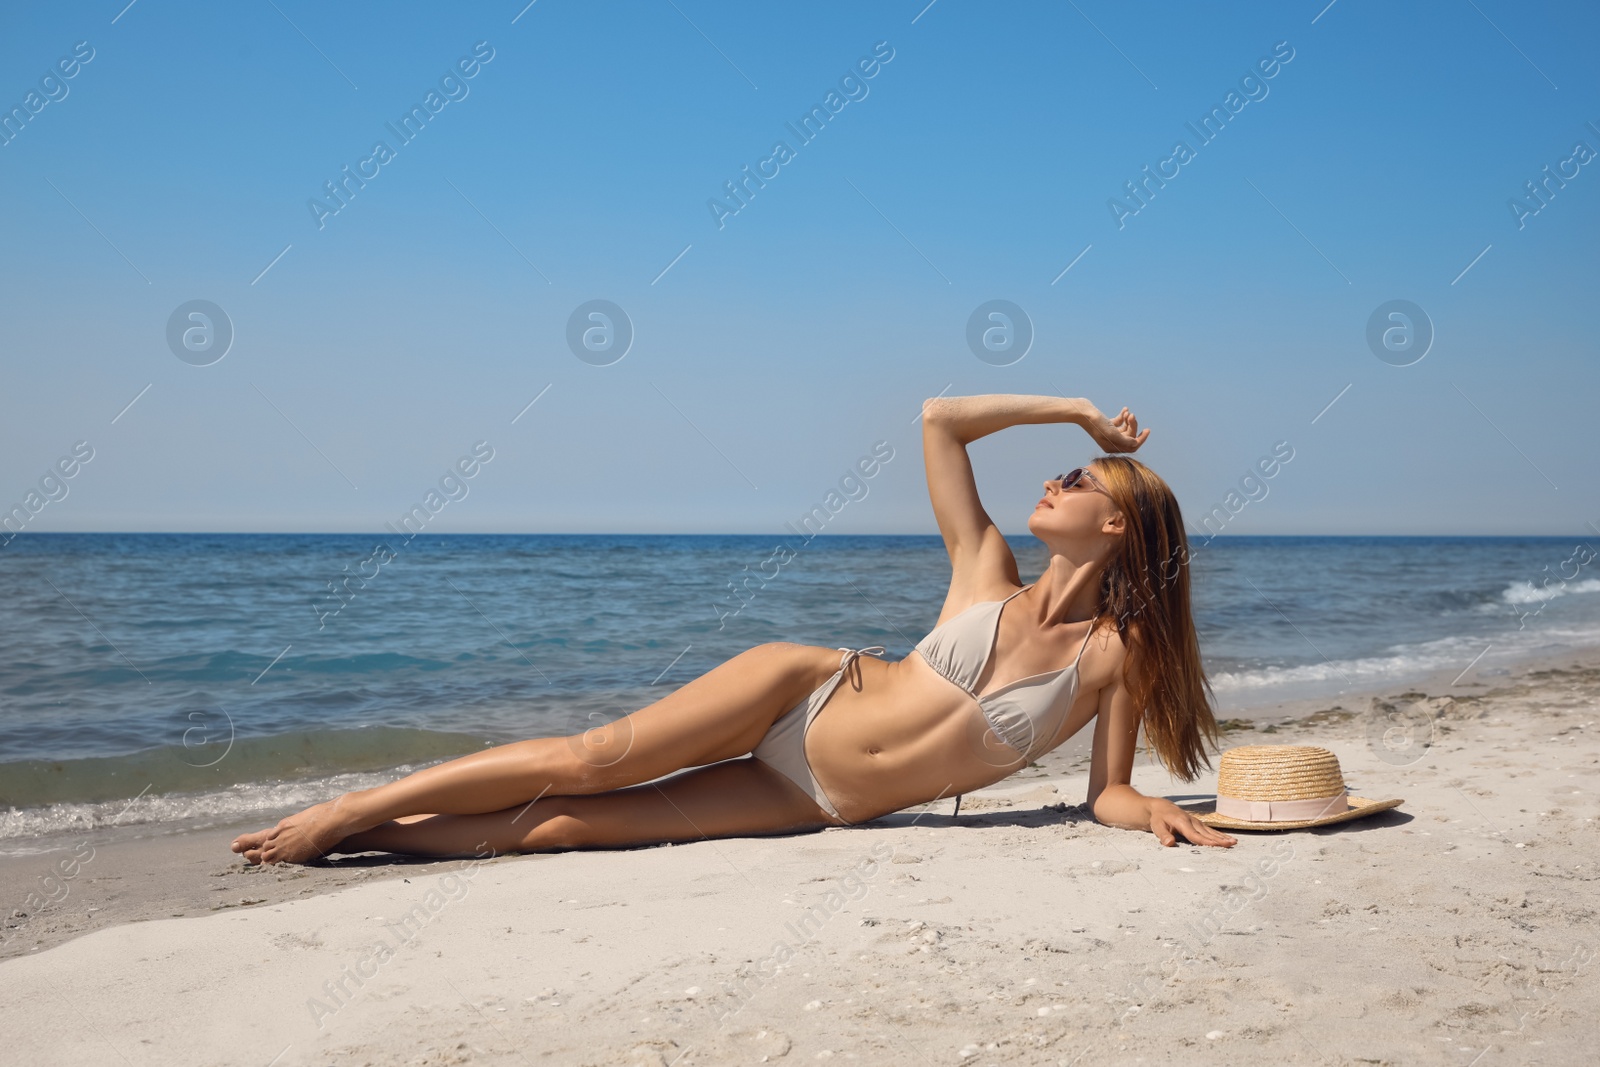 Photo of Attractive woman with perfect body in bikini lying on sandy beach near sea